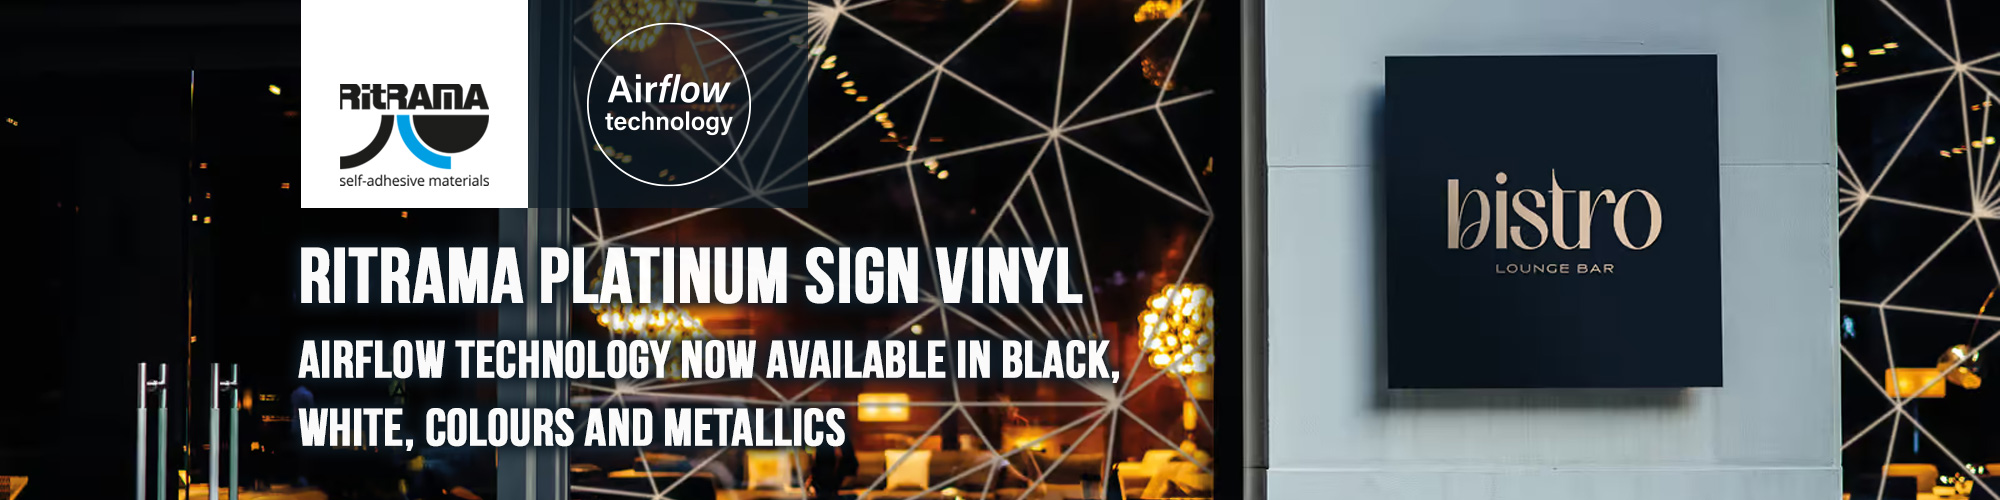 Victory Design - Ritrama RI-Mark Platinum Sign Vinyl